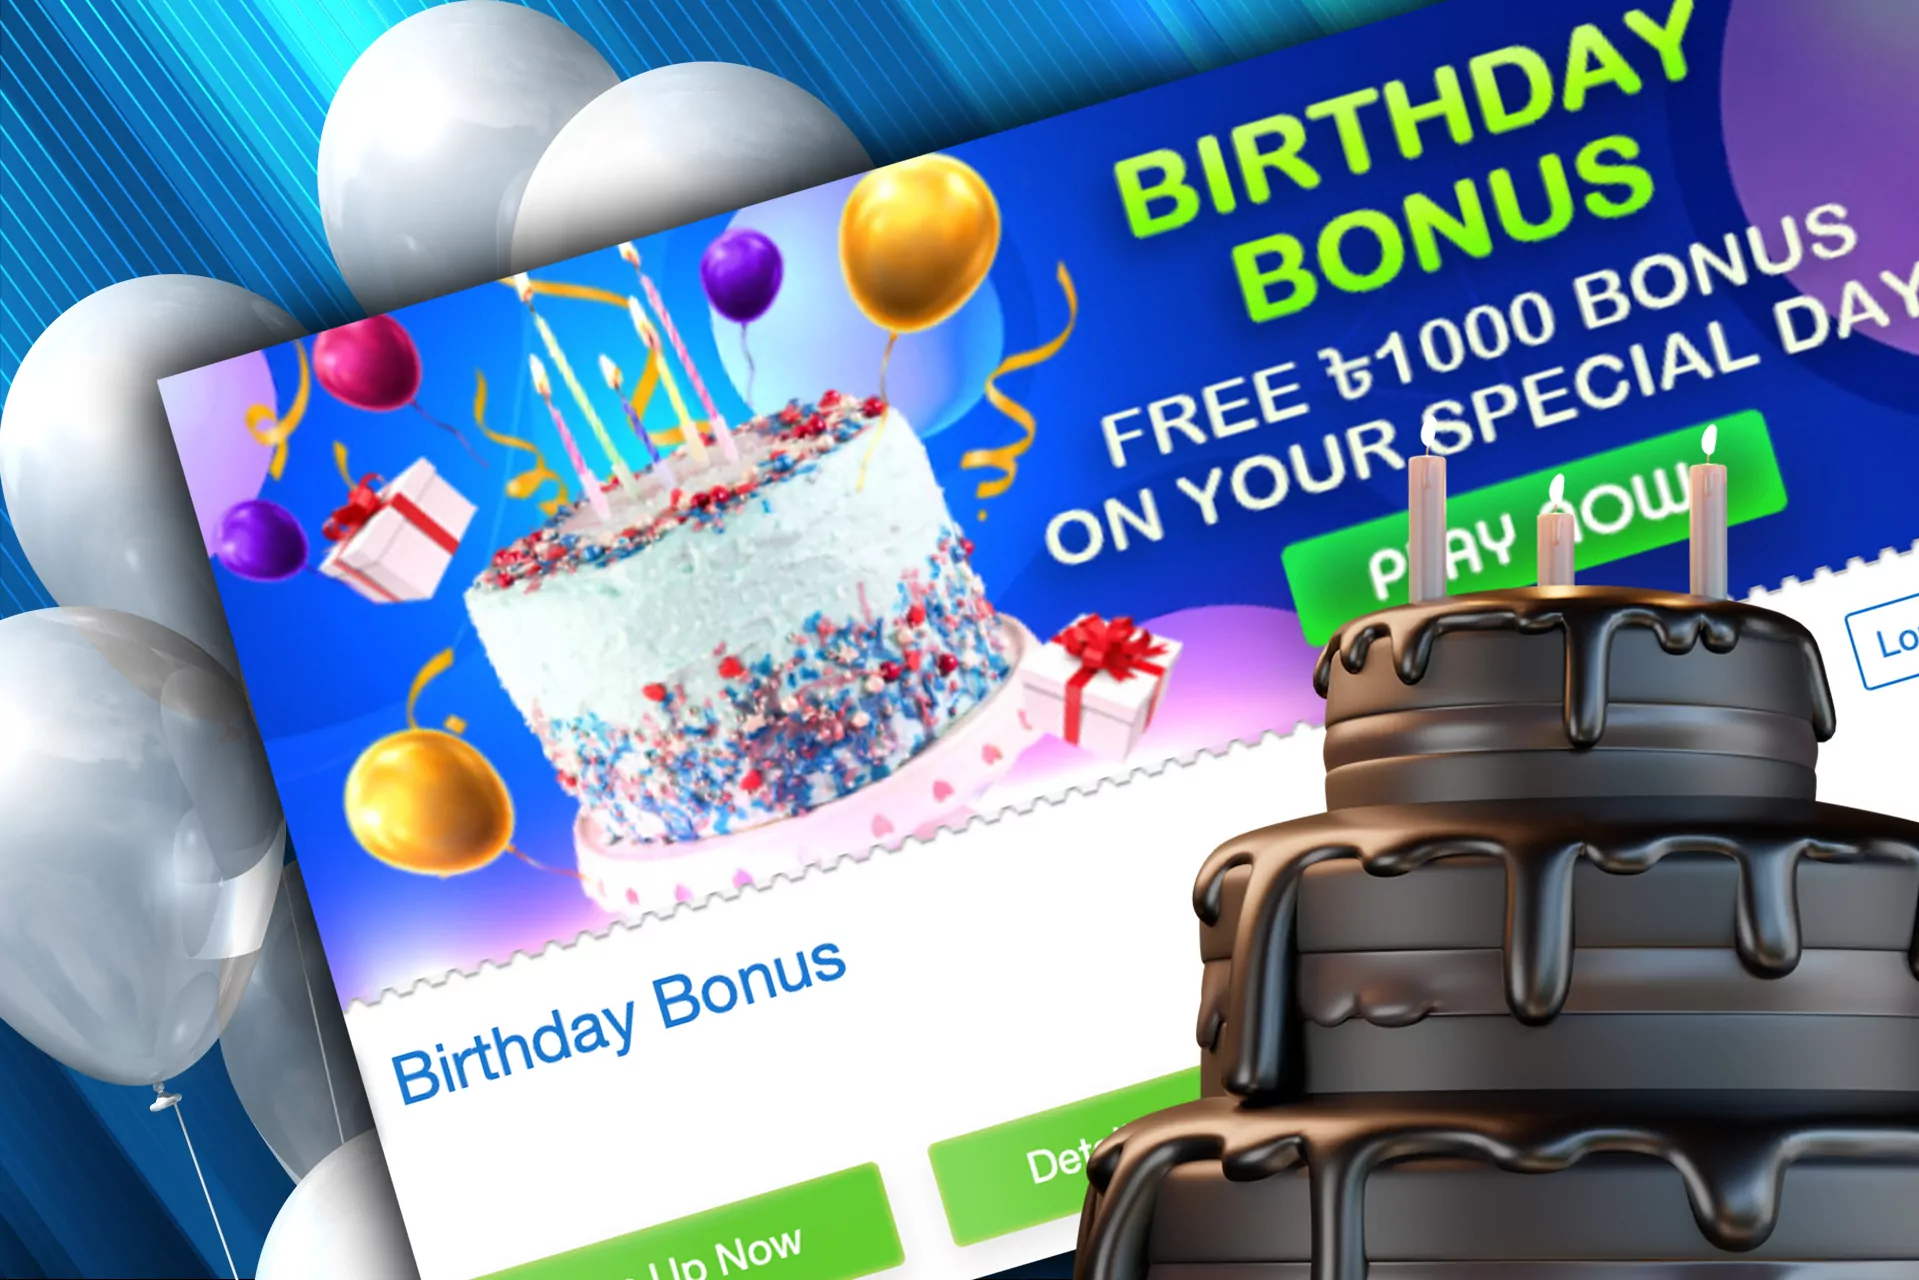 Receive additional 1000 BDT bonus on your birthday.